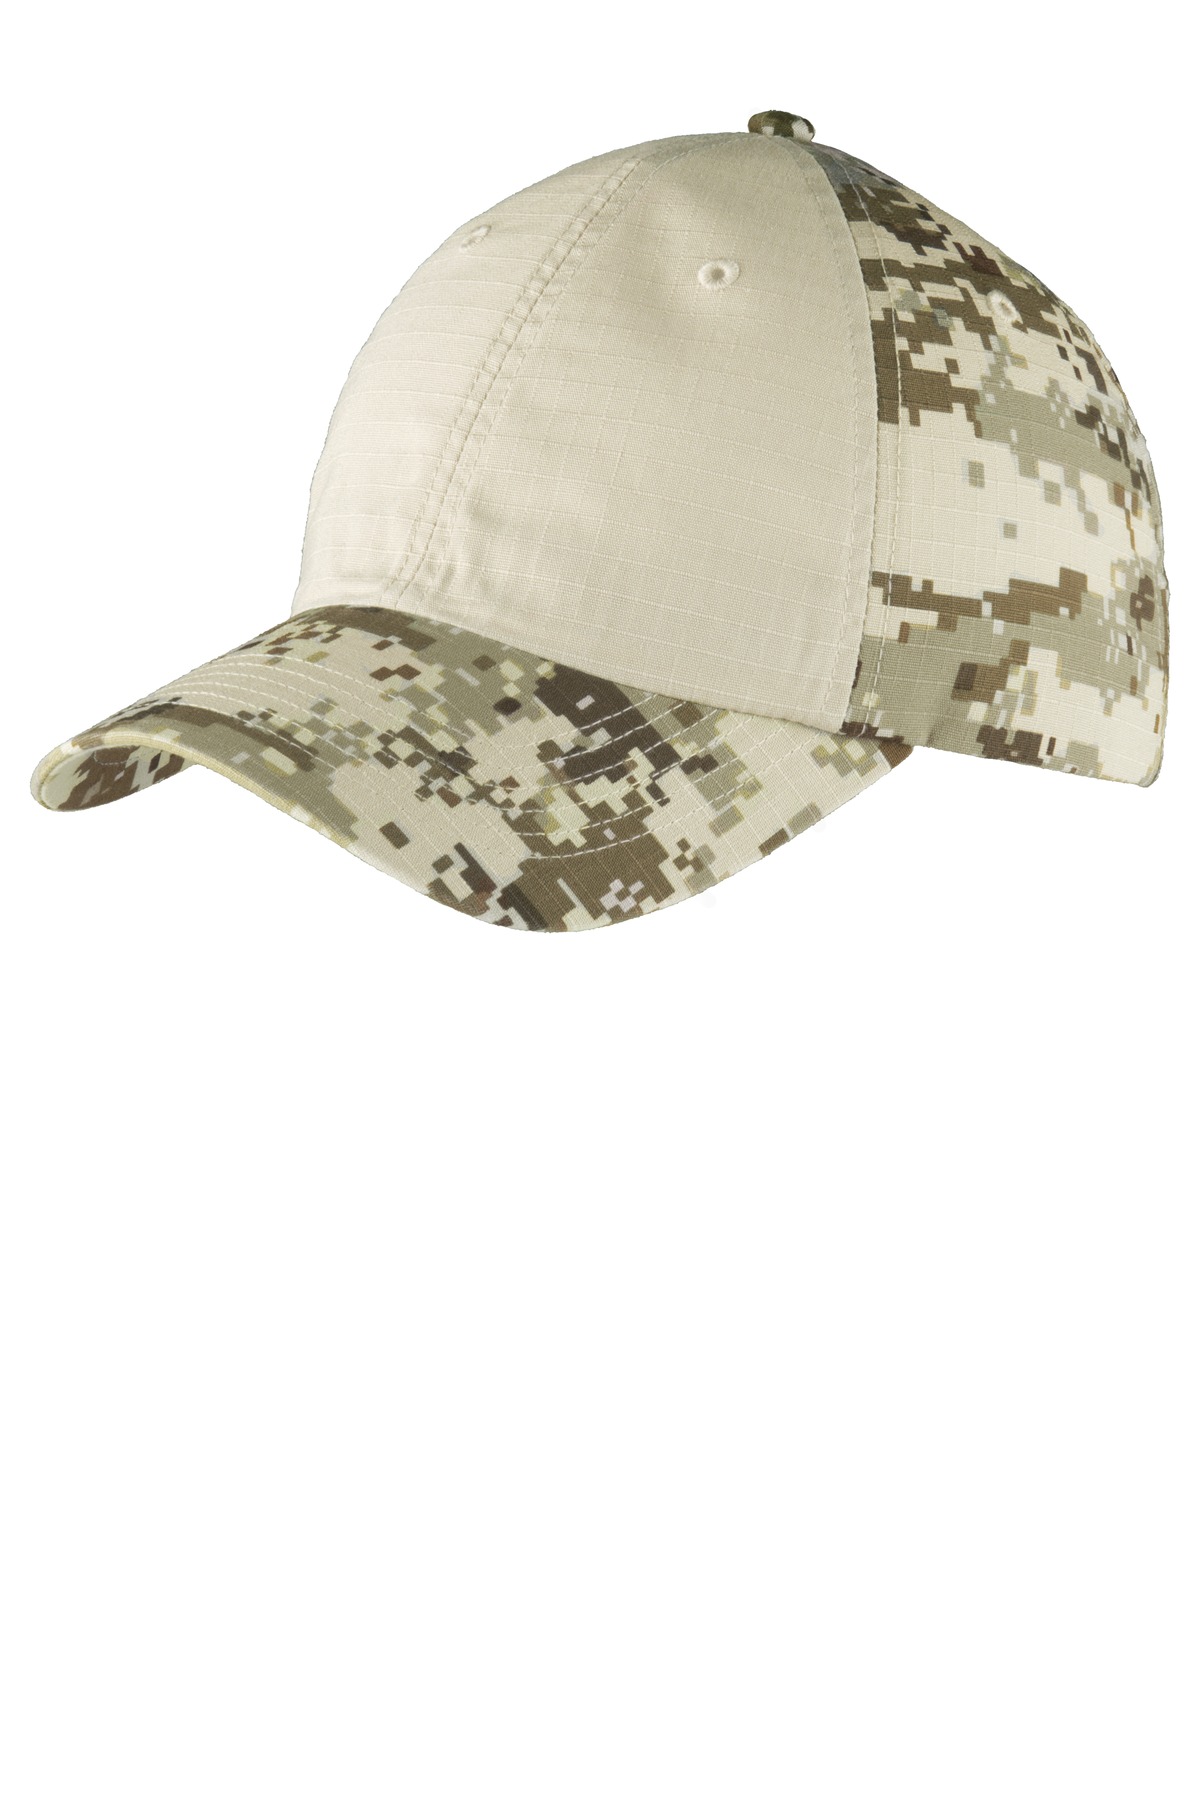 Port Authority Hospitality Caps ® Colorblock Digital Ripstop Camouflage Cap.-Port Authority